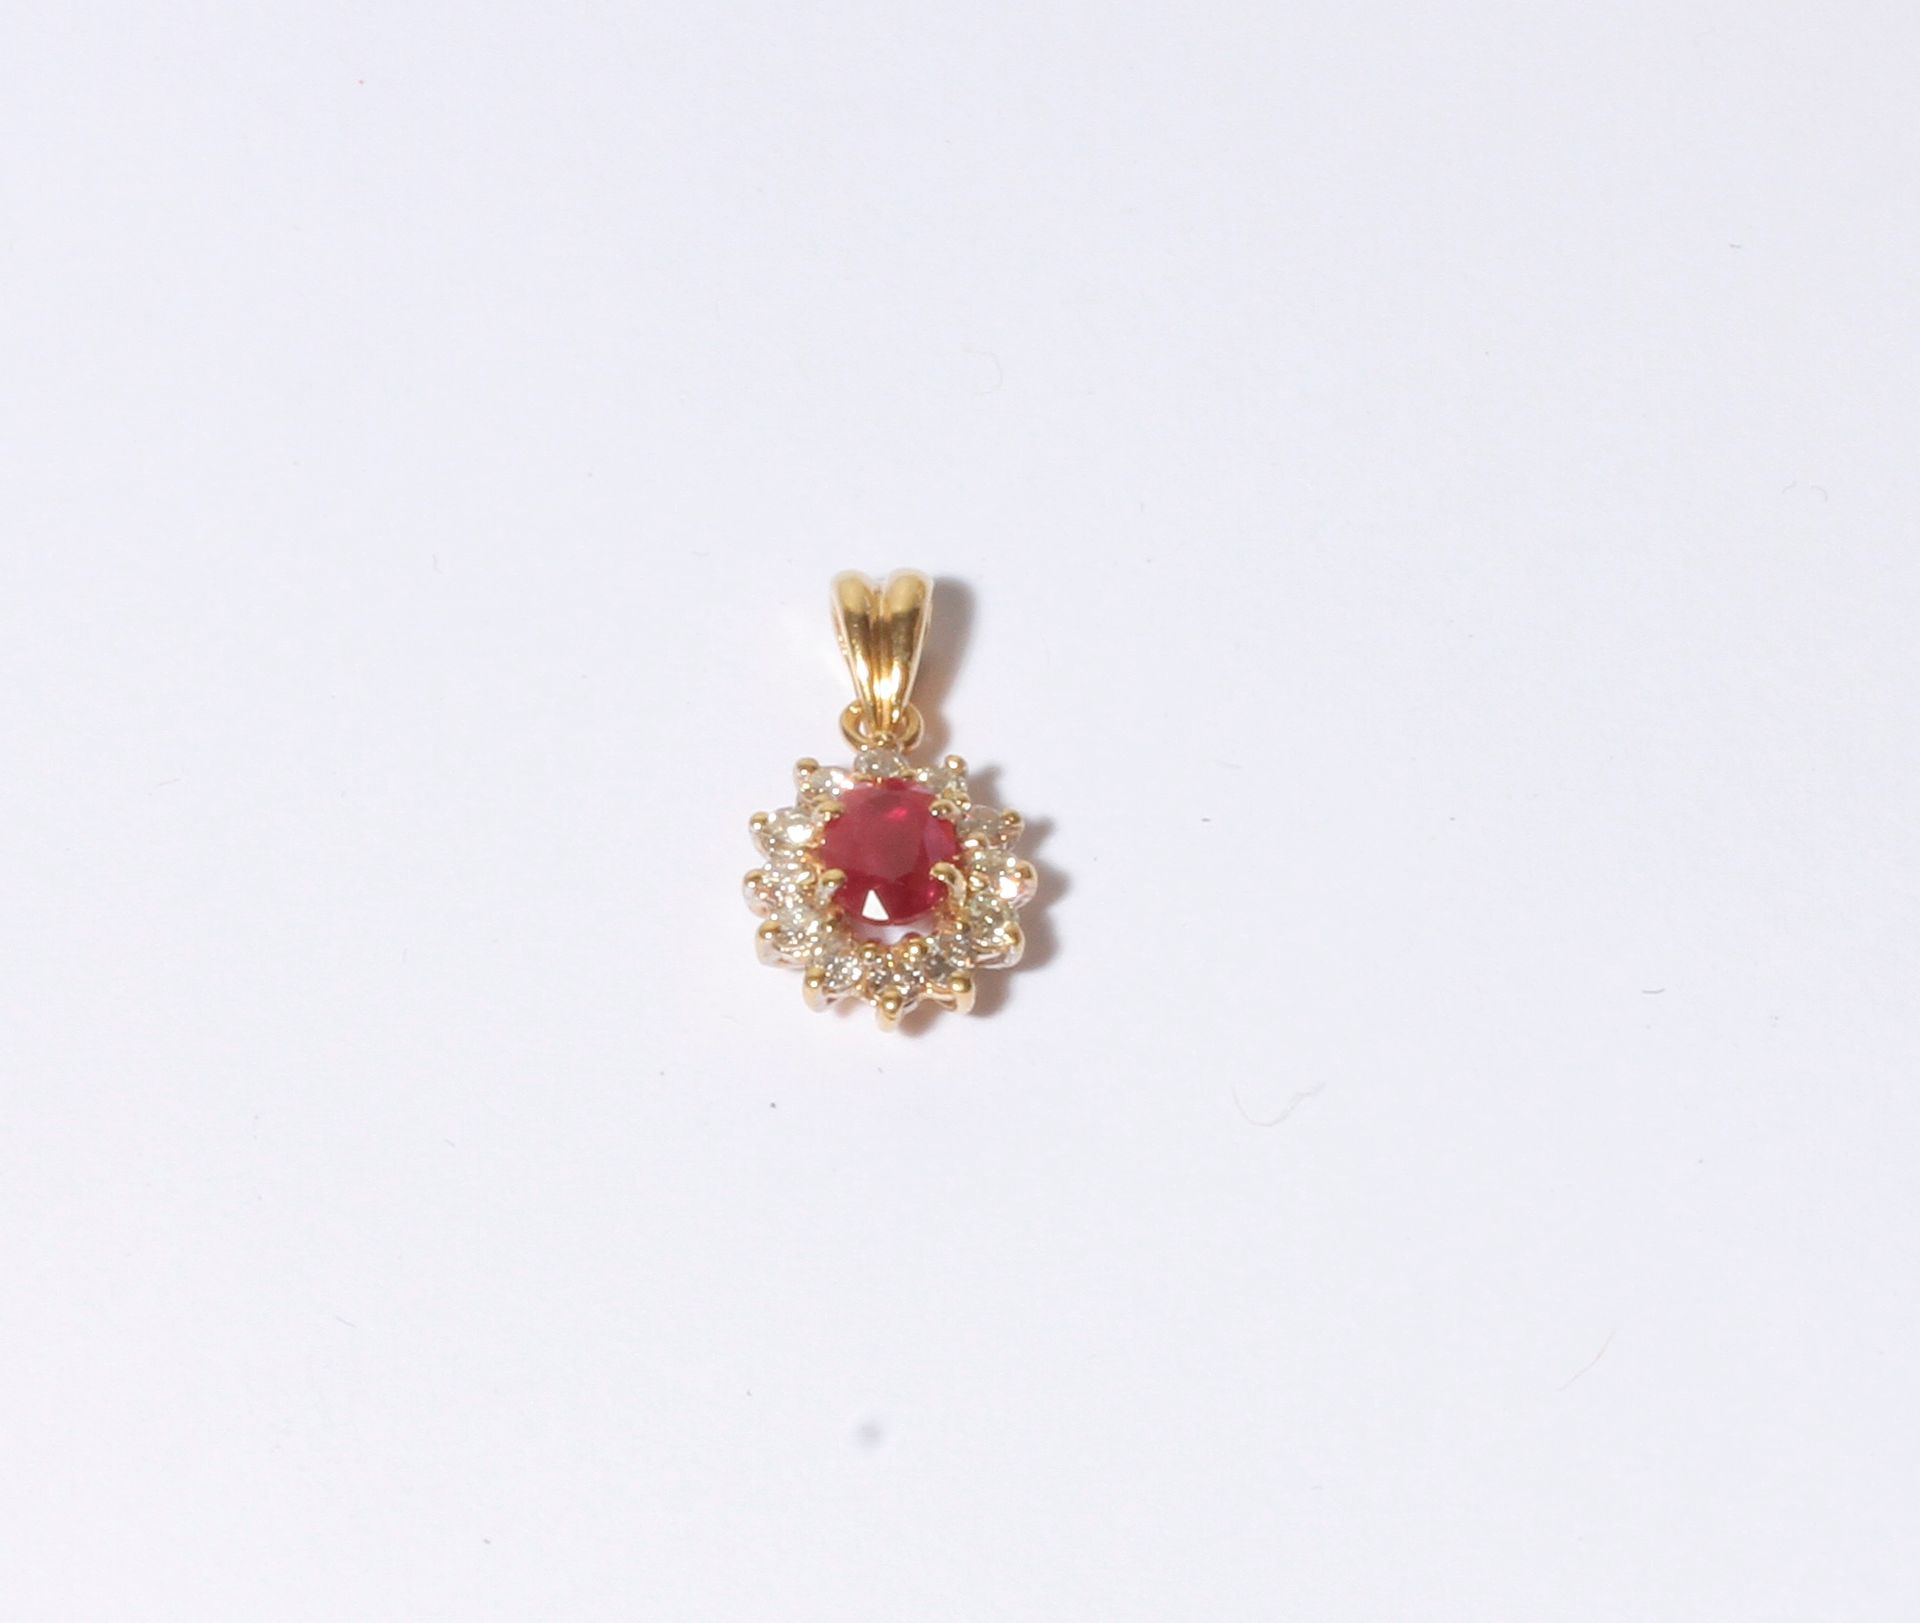 Null 18K（750）金吊坠，镶有一颗椭圆形红宝石，周围有12颗圆钻。高度：约14毫米。

毛重 : 2,6 g